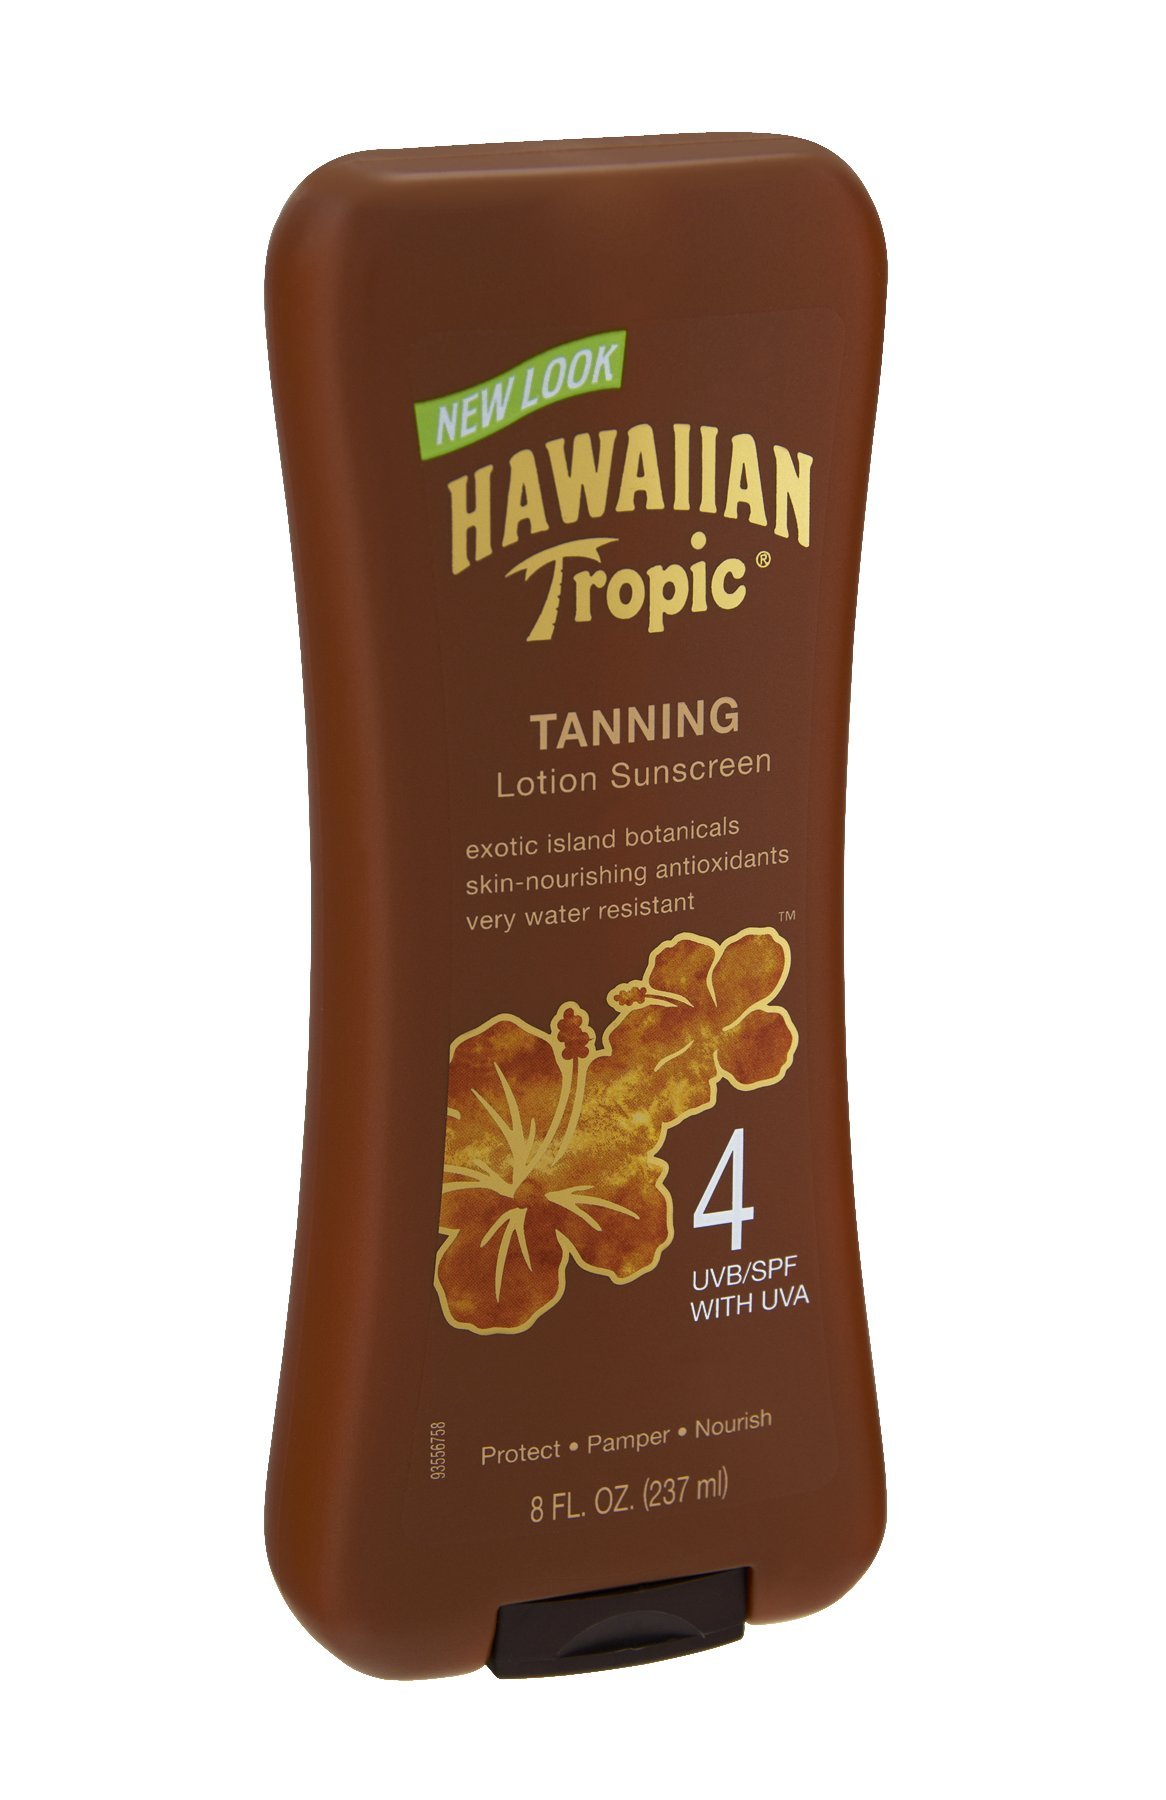 Mua Hawaiian Spf4 Tropic Tanning Lotion Cocoa Butter 8 Ounce 235ml 3 Pack Trên Amazon Mỹ 